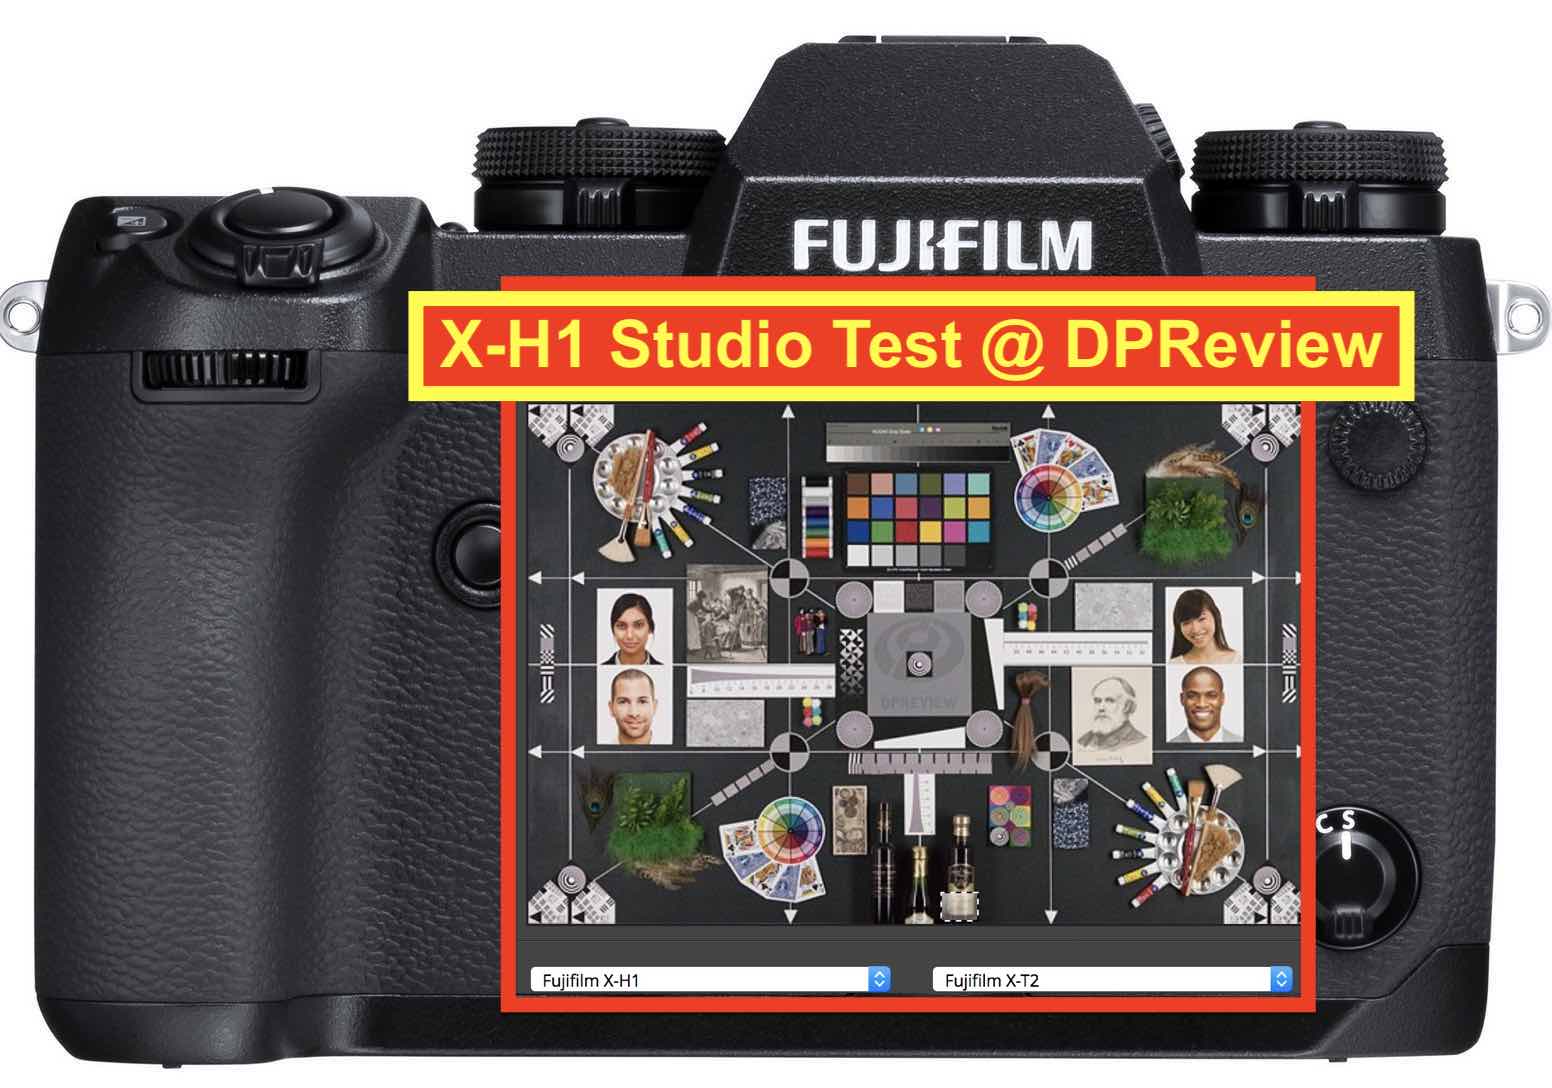 DPReview Fujifilm X-H1 Studio Test: Is the Fujifilm X-H1 Image Quality